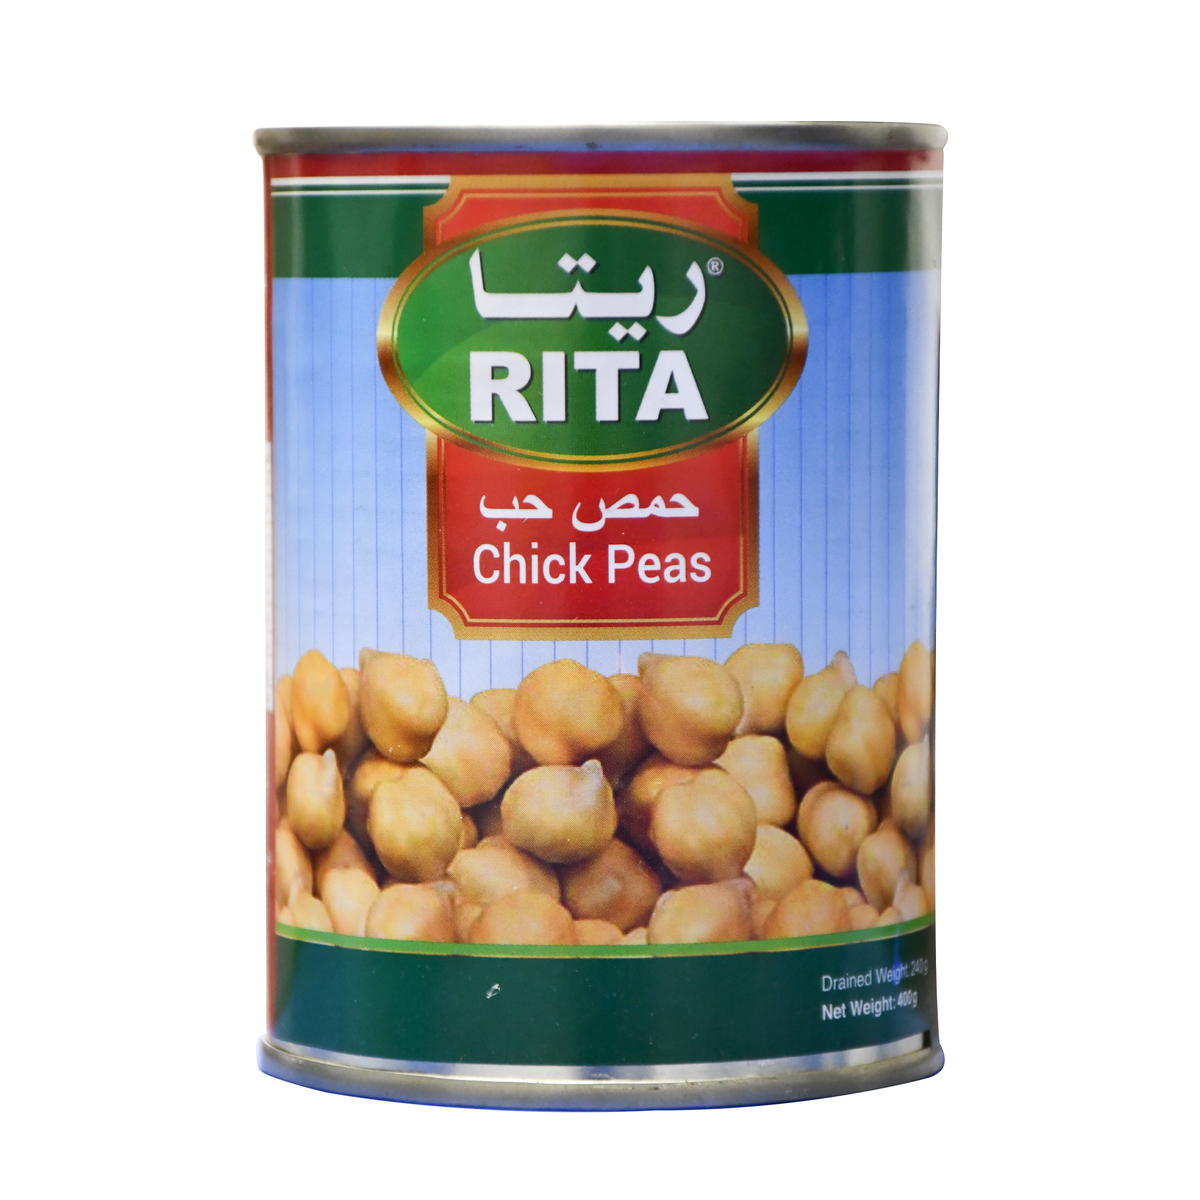 Rita Chick Peas 400g